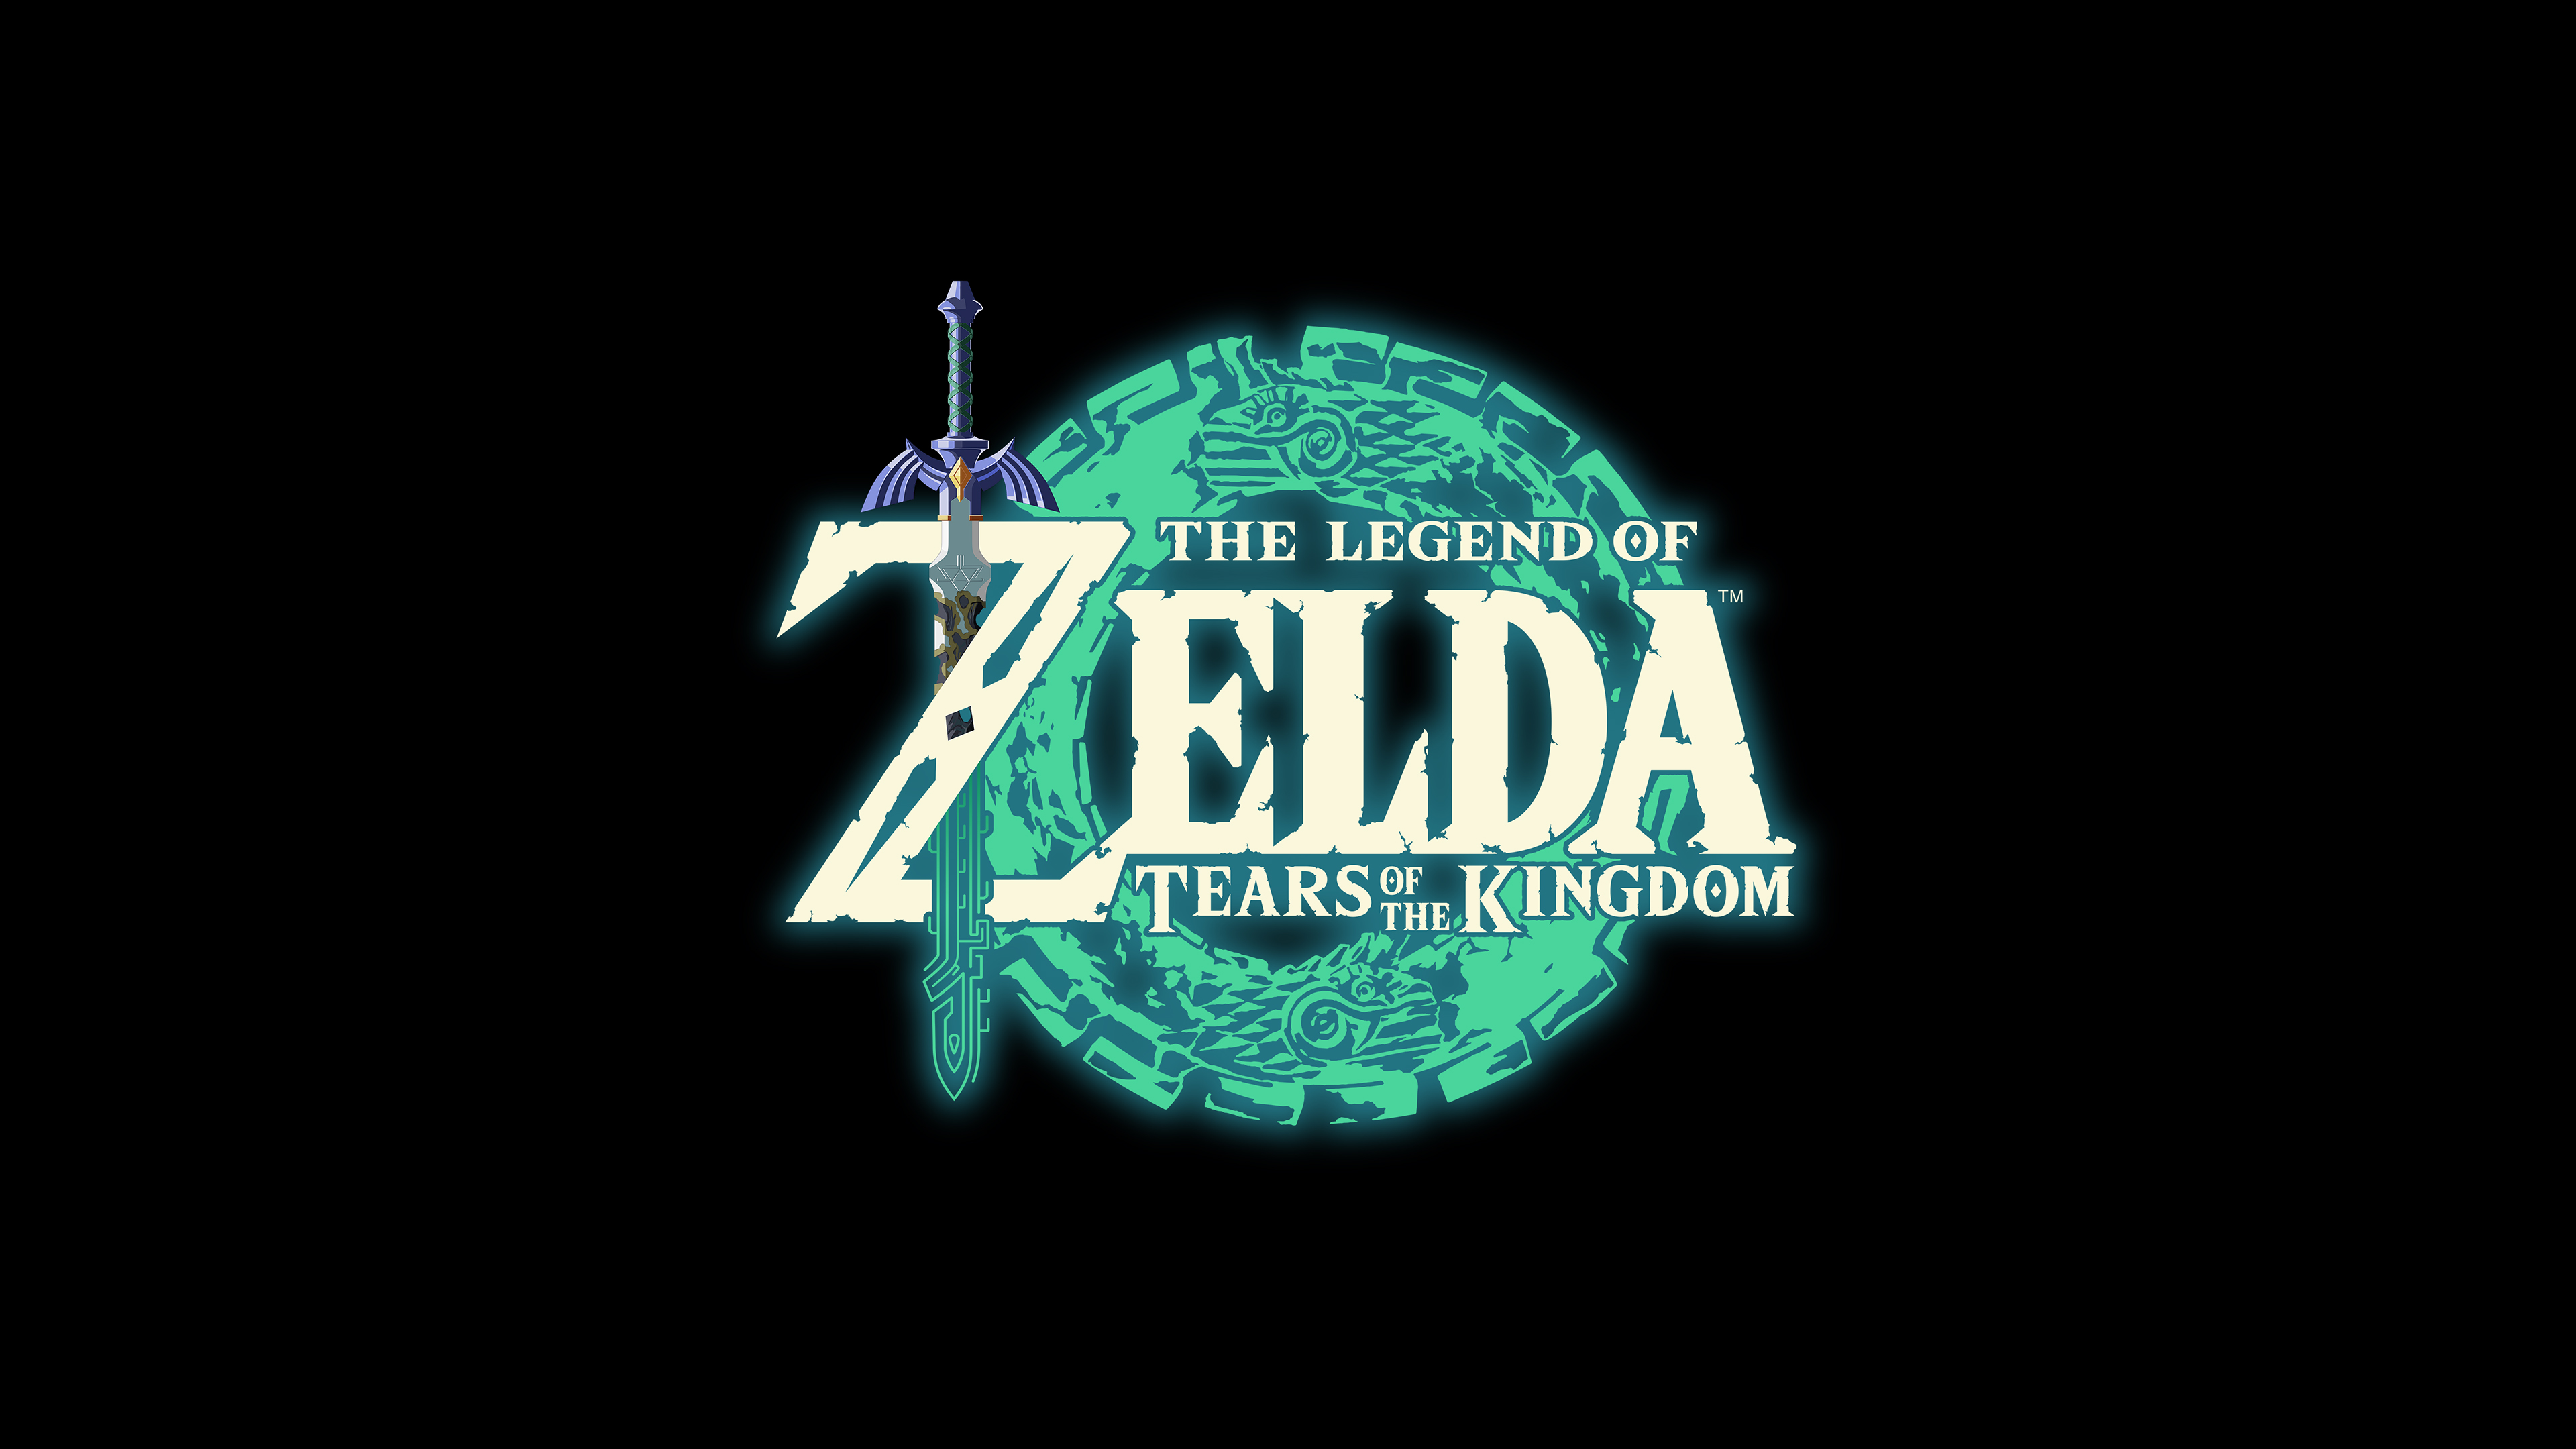 How to Draw the Legend of Zelda Logo - YouTube